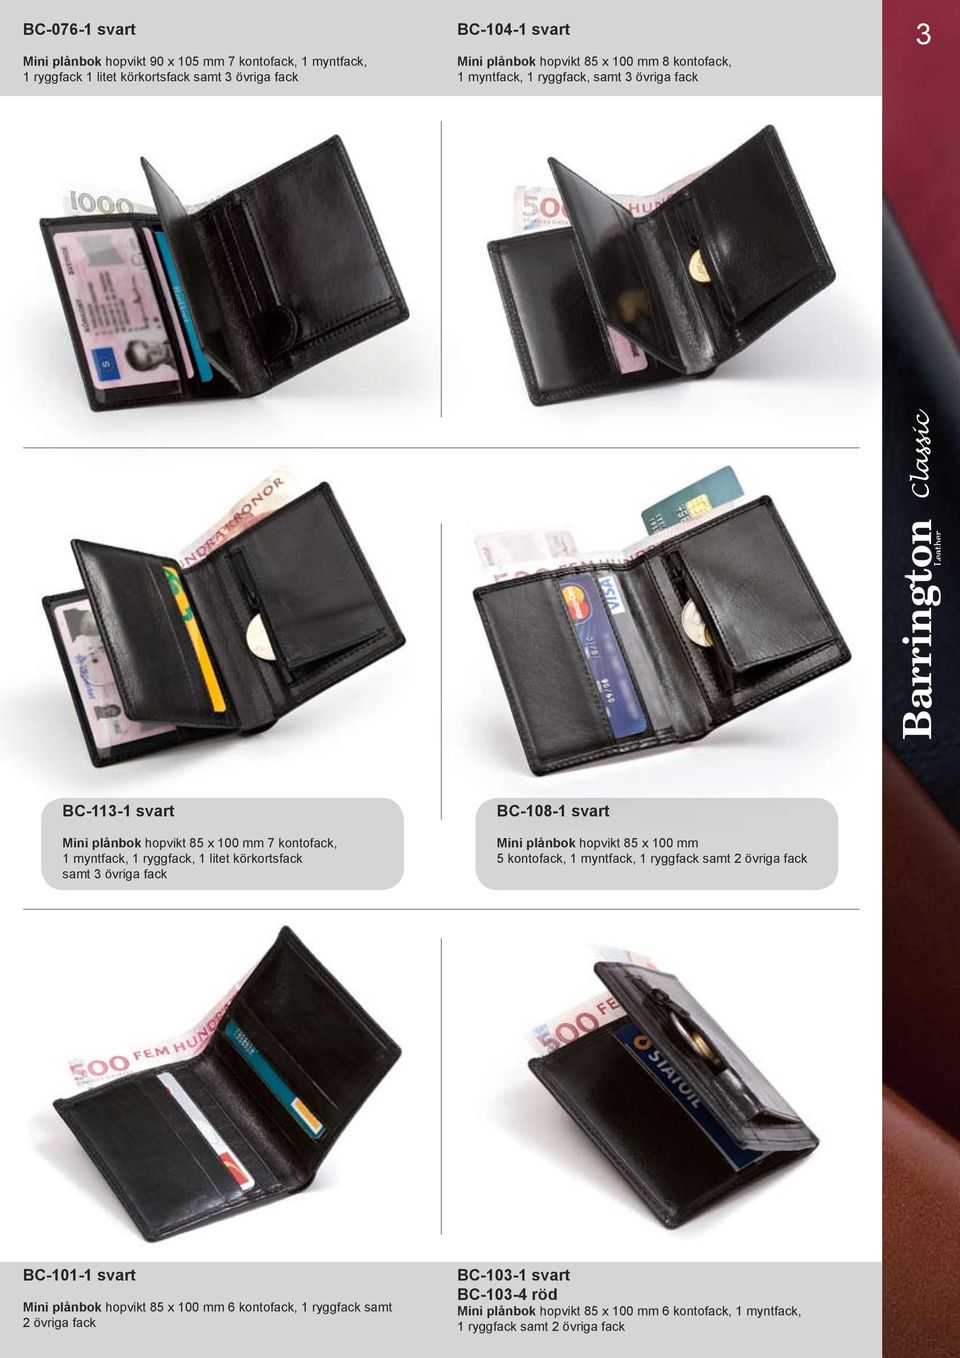 körkortsfack samt 3 övriga fack BC-108-1 svart Mini plånbok hopvikt 85 x 100 mm 5 kontofack, 1 myntfack, 1 ryggfack samt 2 övriga fack BC-101-1 svart Mini plånbok